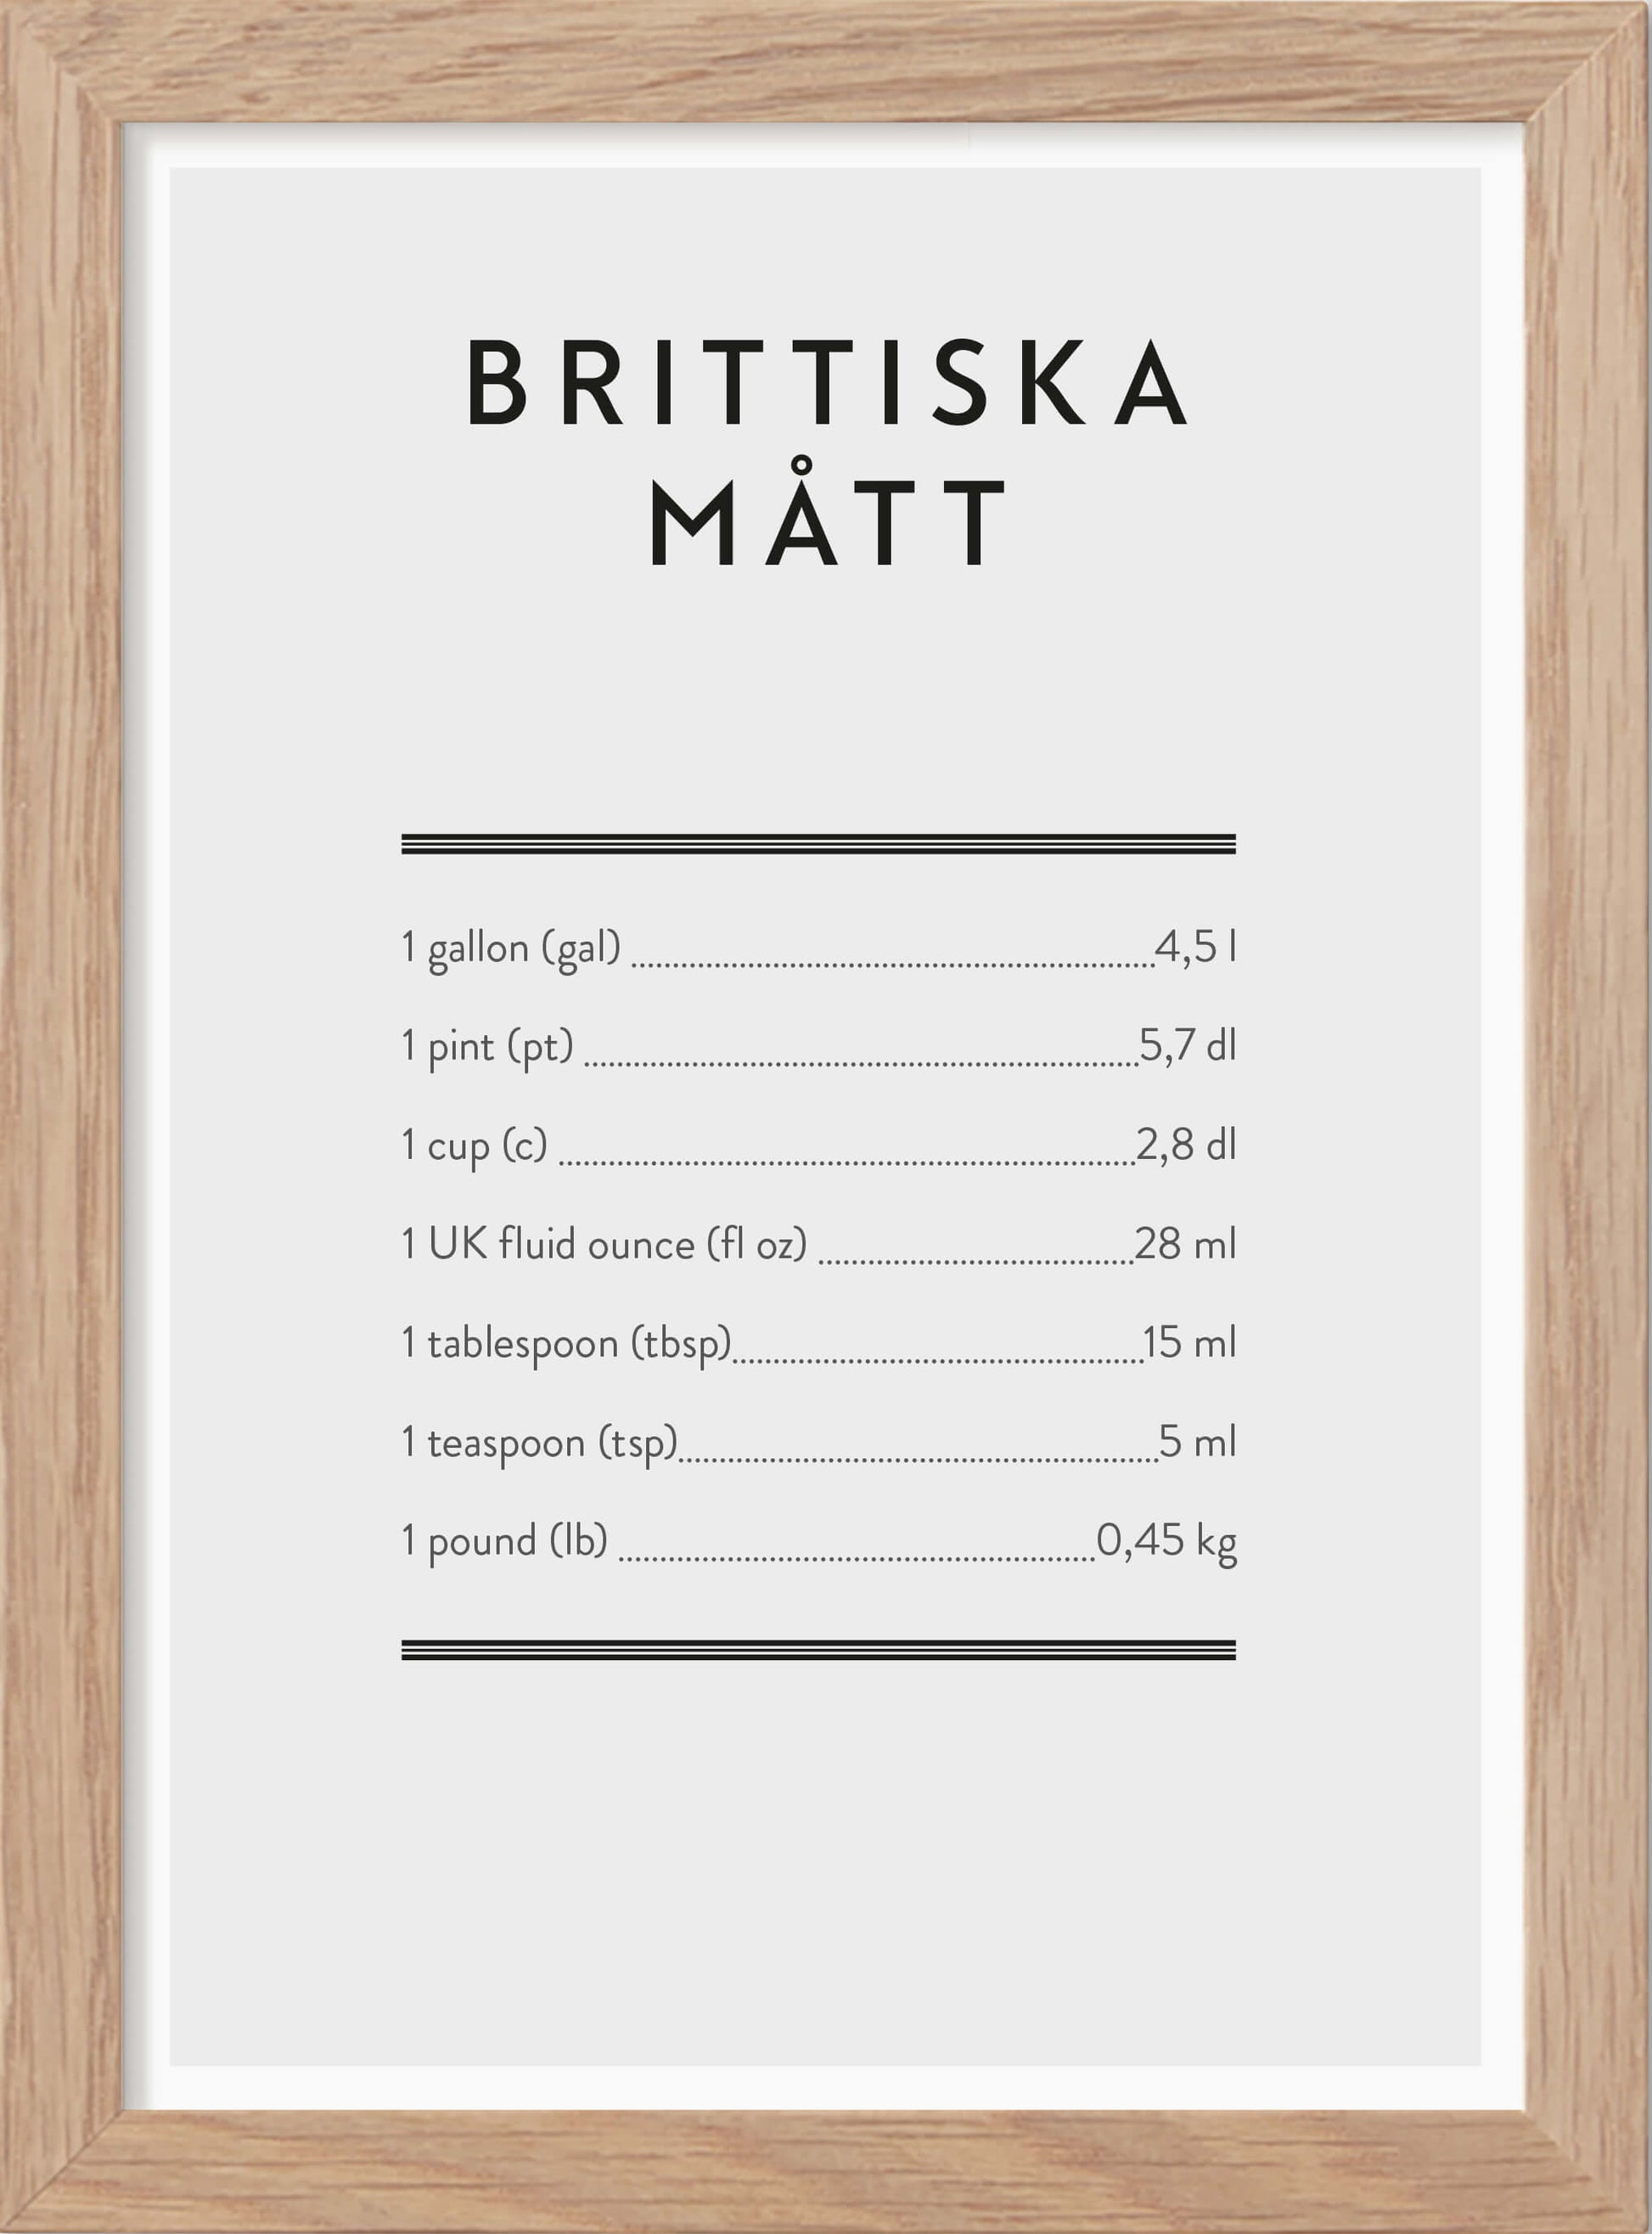 Brittiska mått - Mini print A5 - Kunskapstavlan